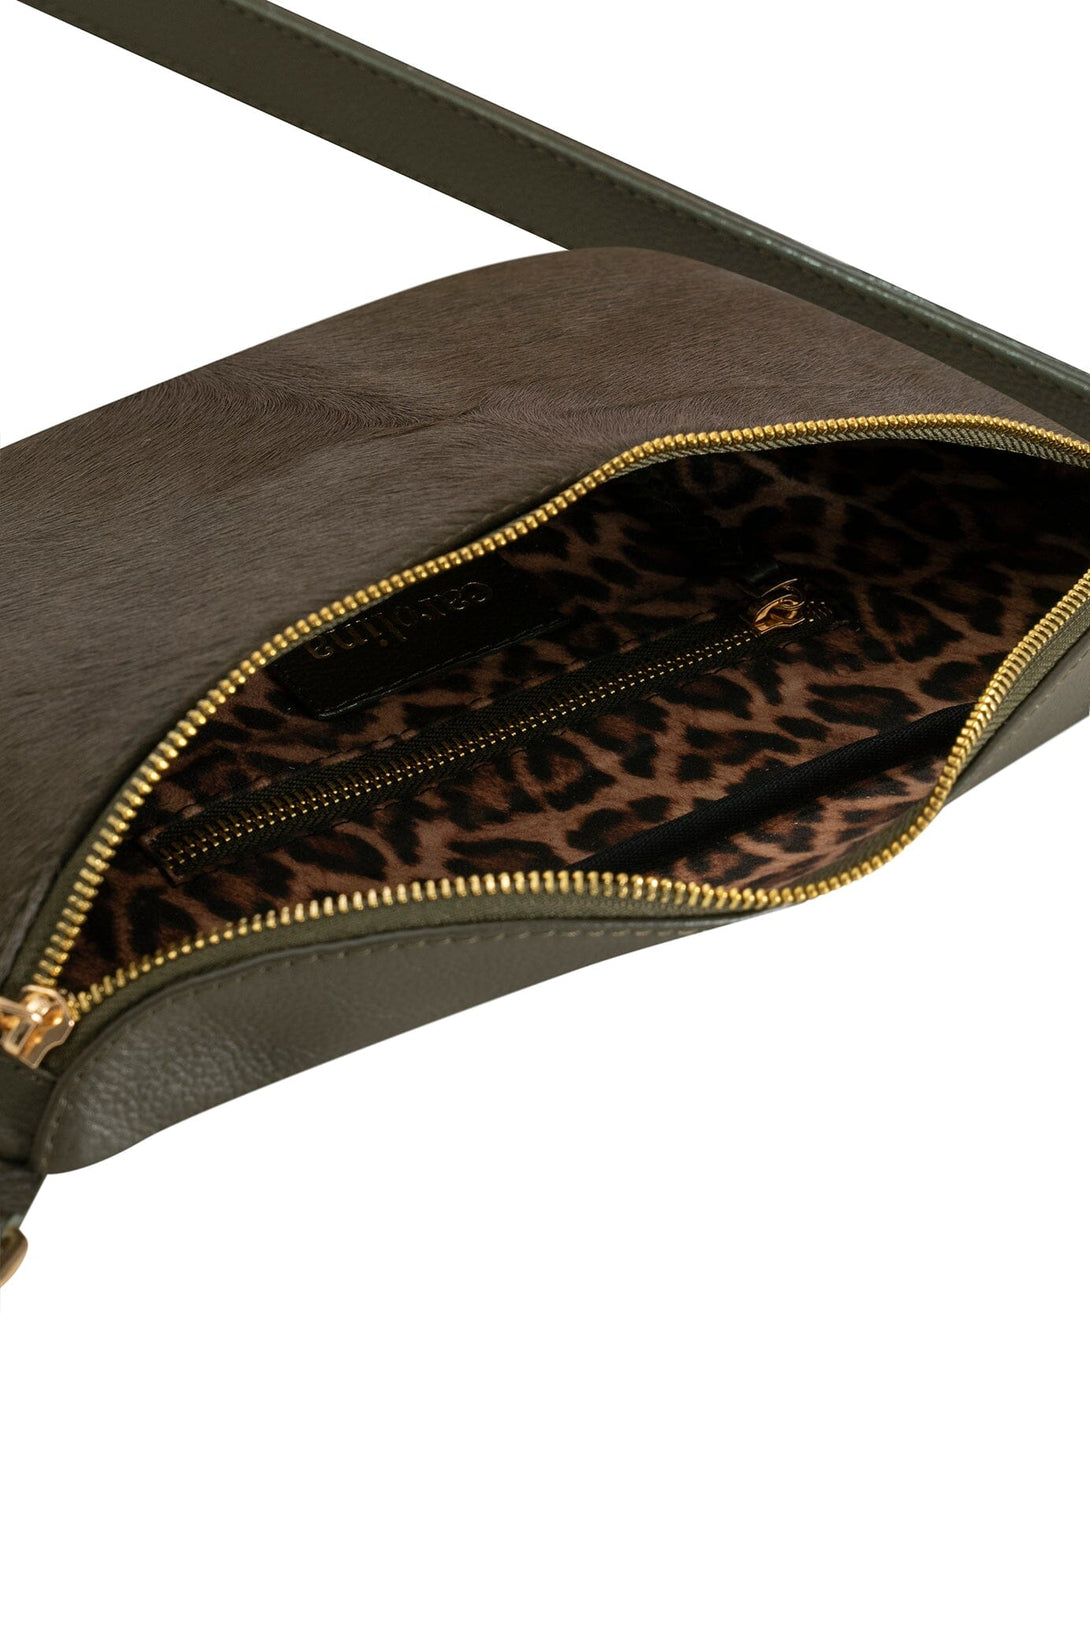 Ramona Leather Handbag Olive Cowhide Leather